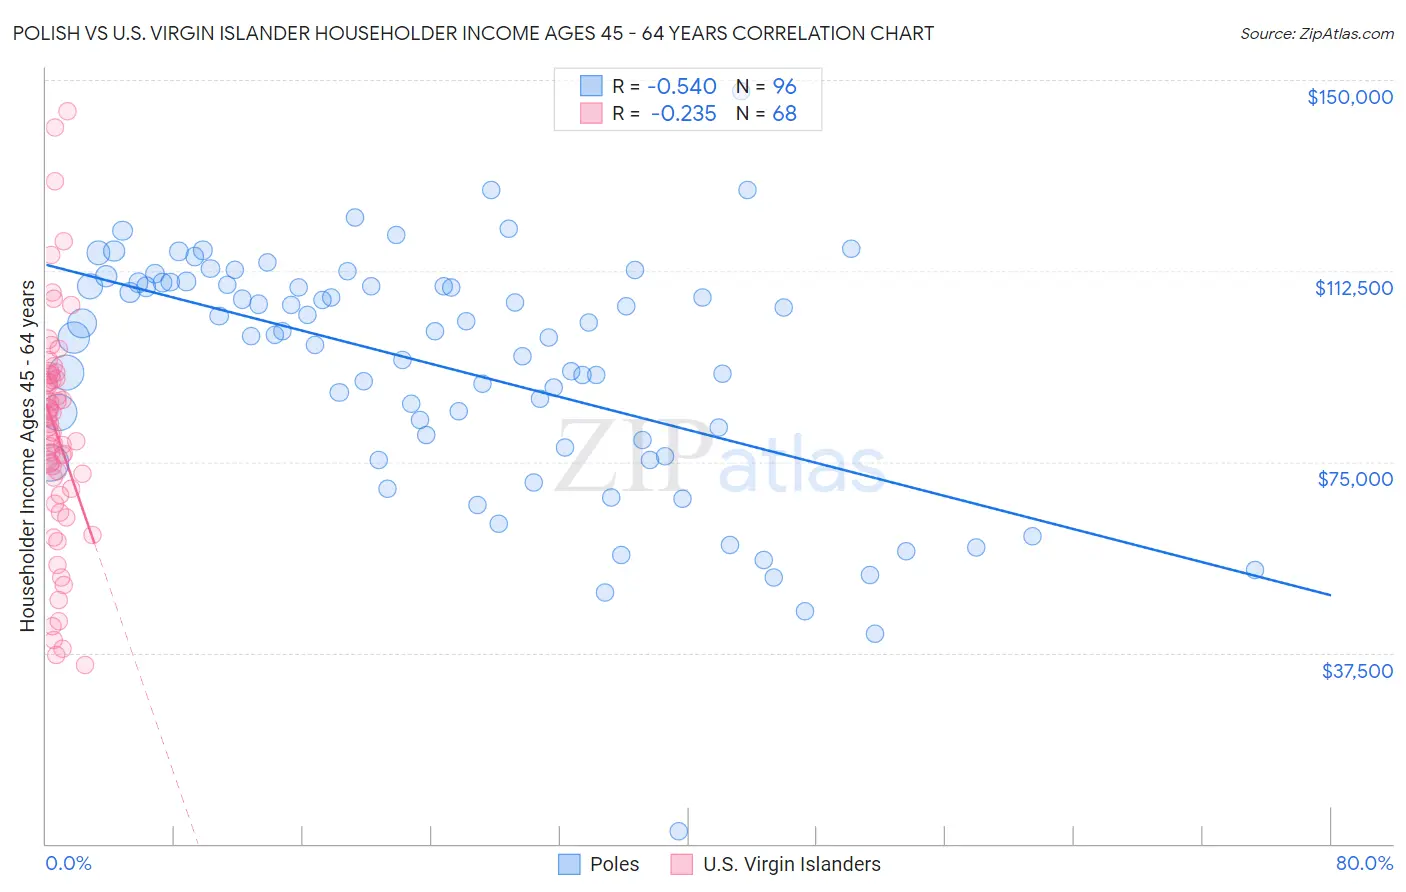 Polish vs U.S. Virgin Islander Householder Income Ages 45 - 64 years